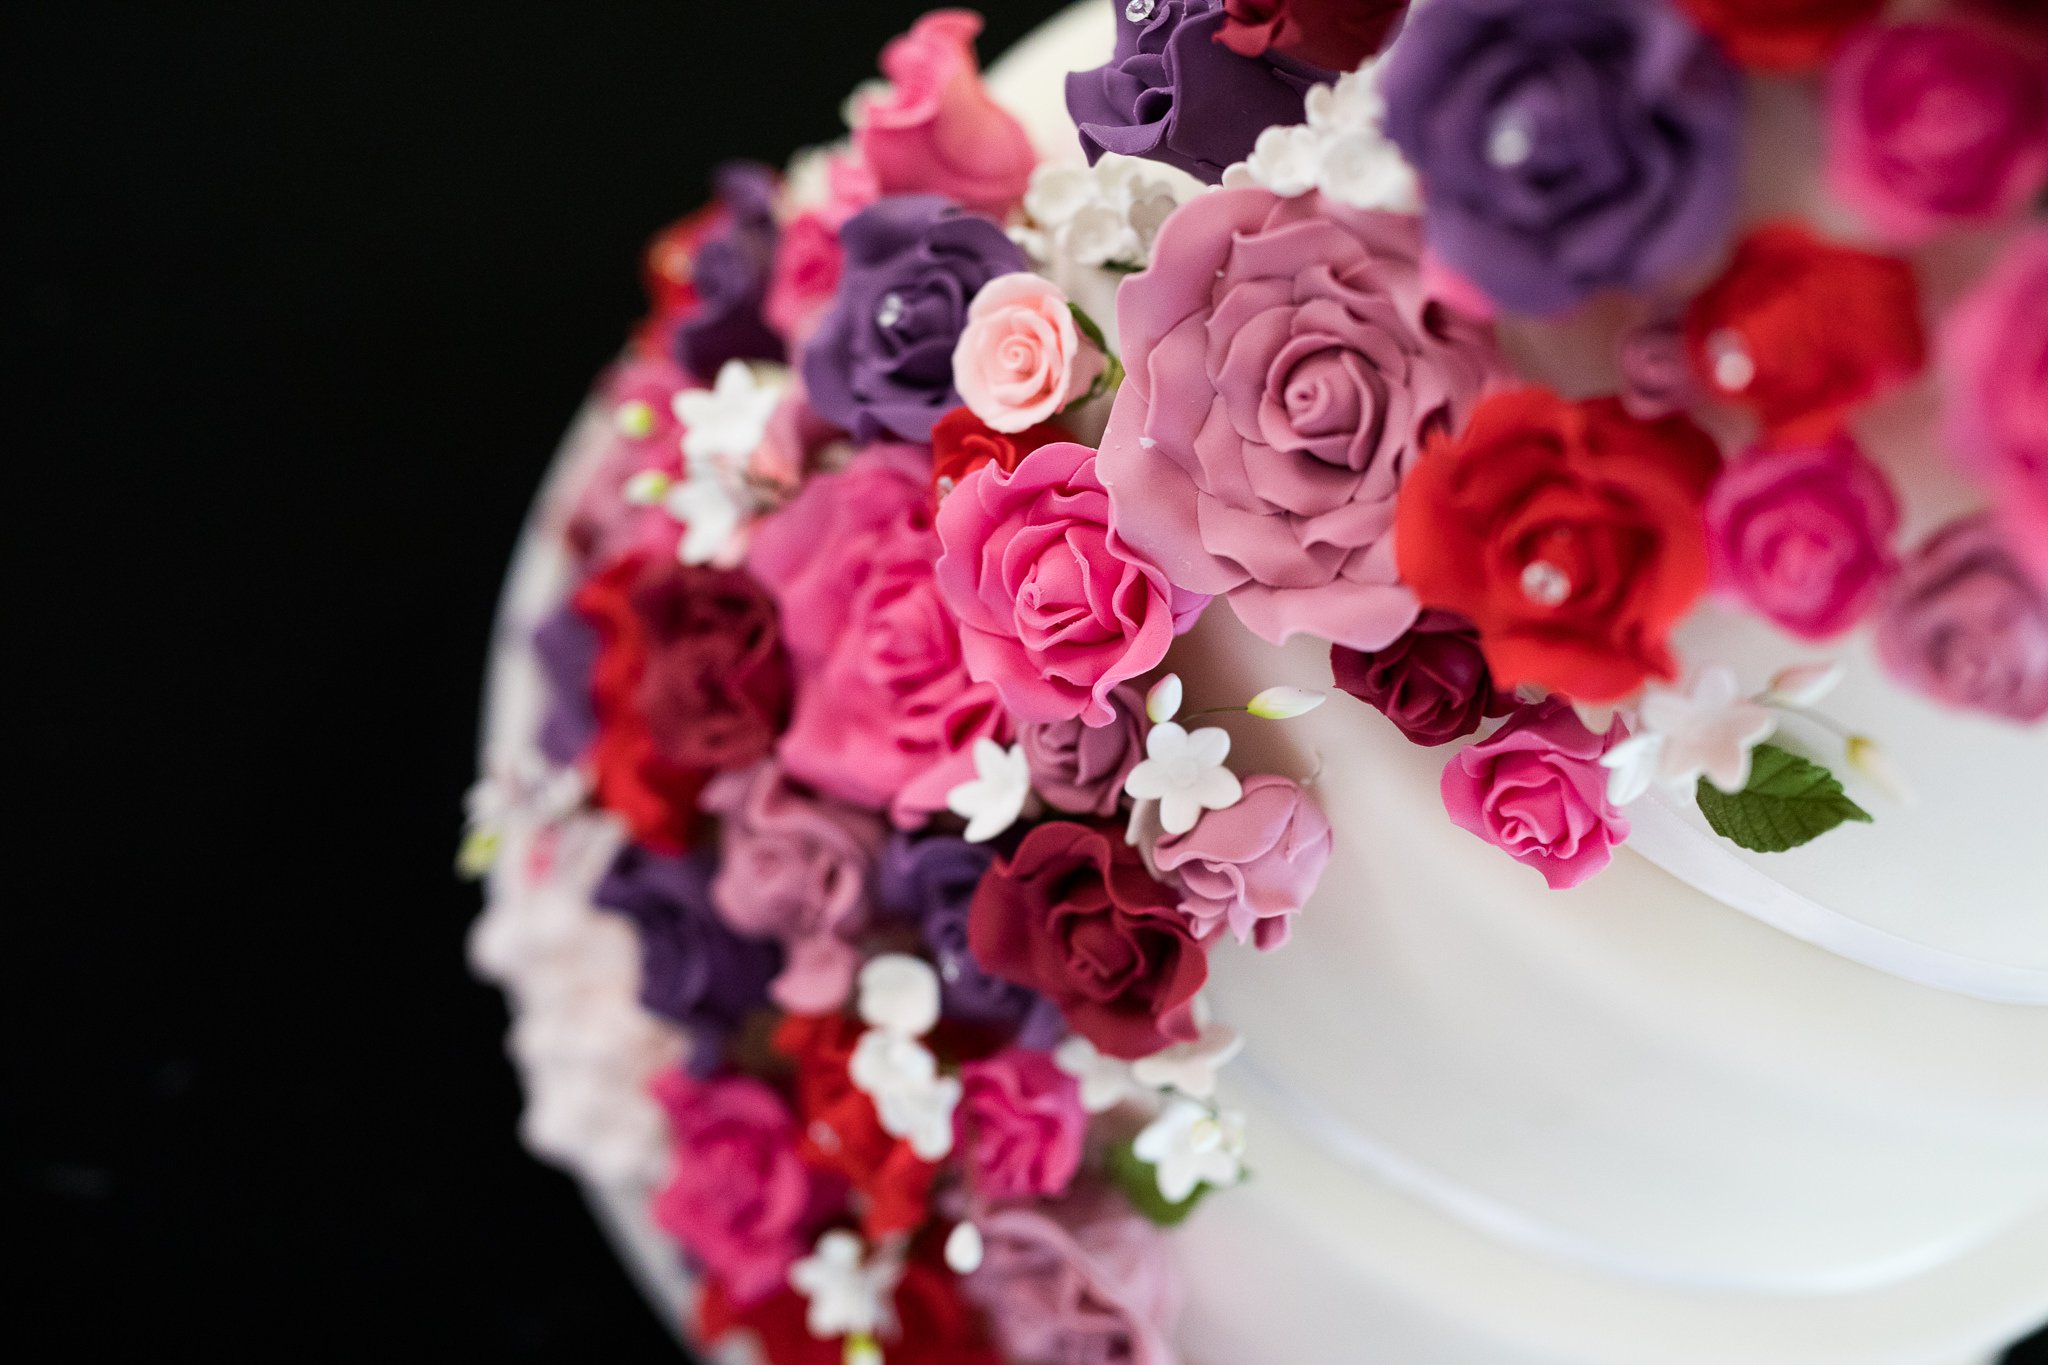  Flowers on wedding cake 